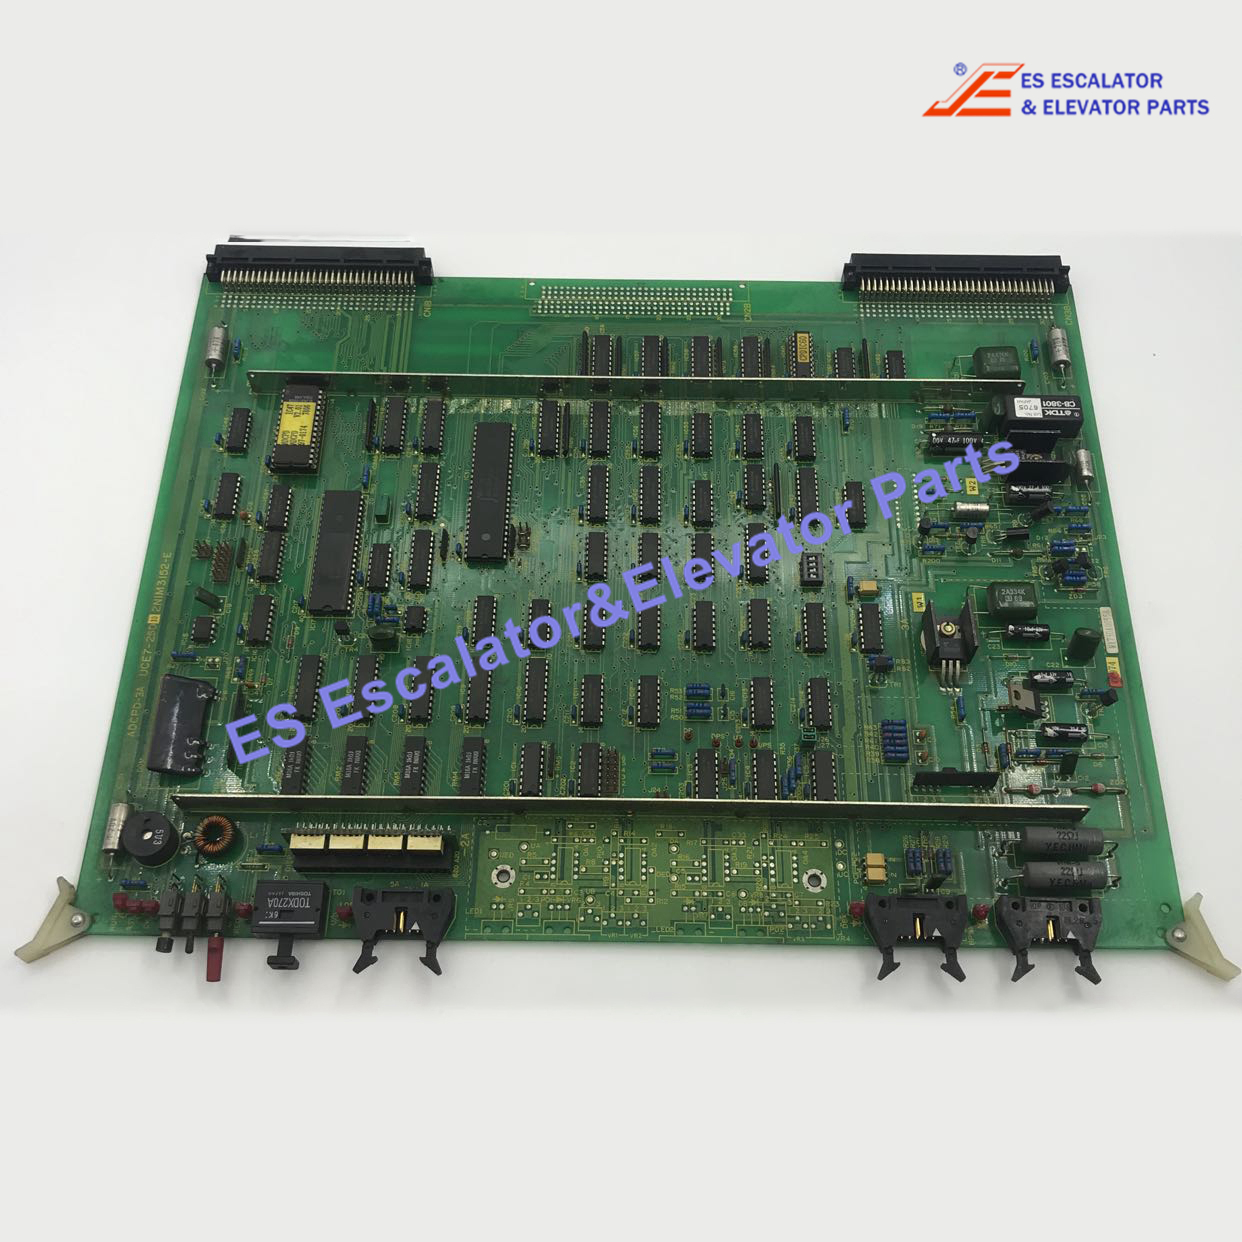 Toshiba ADCPD-3A Elevator CV60 Motherboard Encoding control board Use For Thyssen